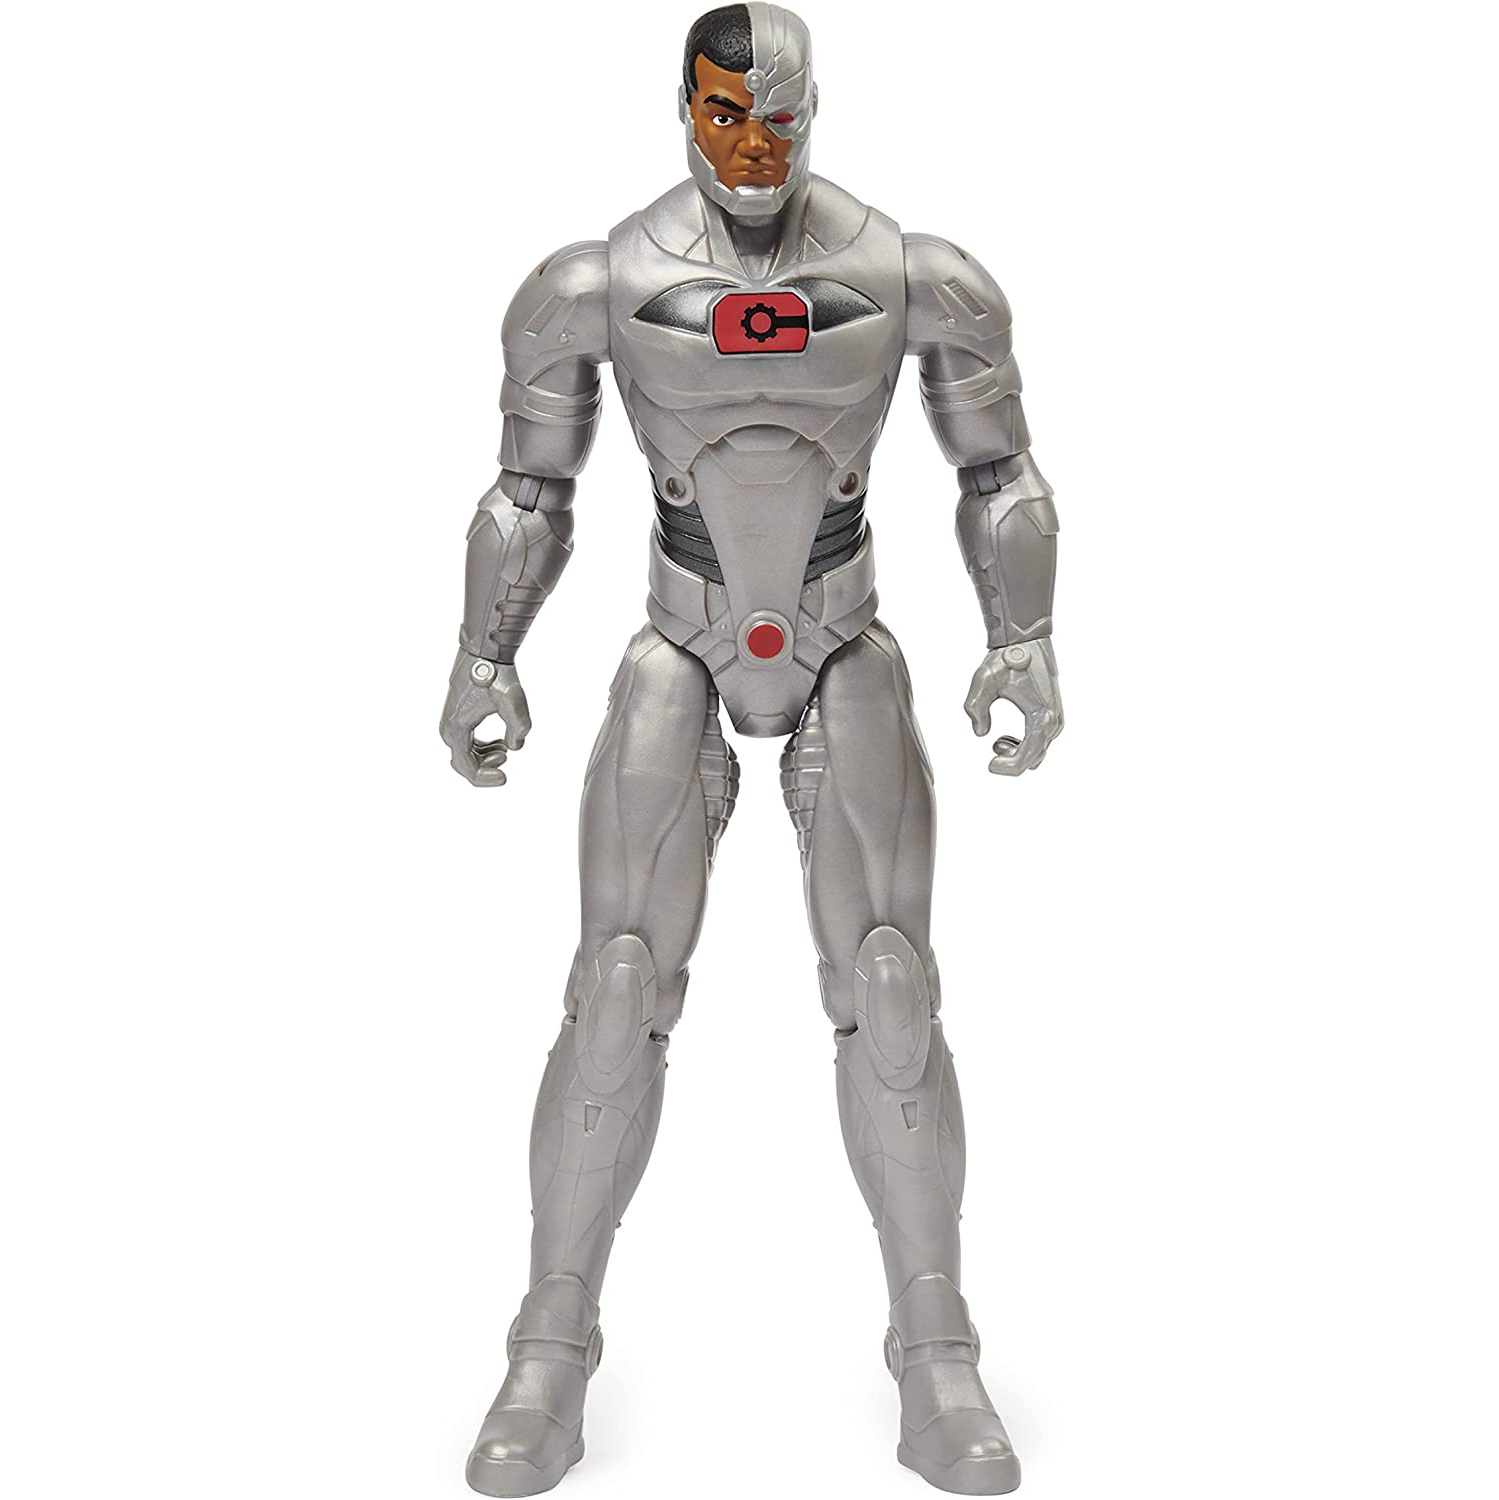 DC Comics 12-inch Cyborg Action Figure